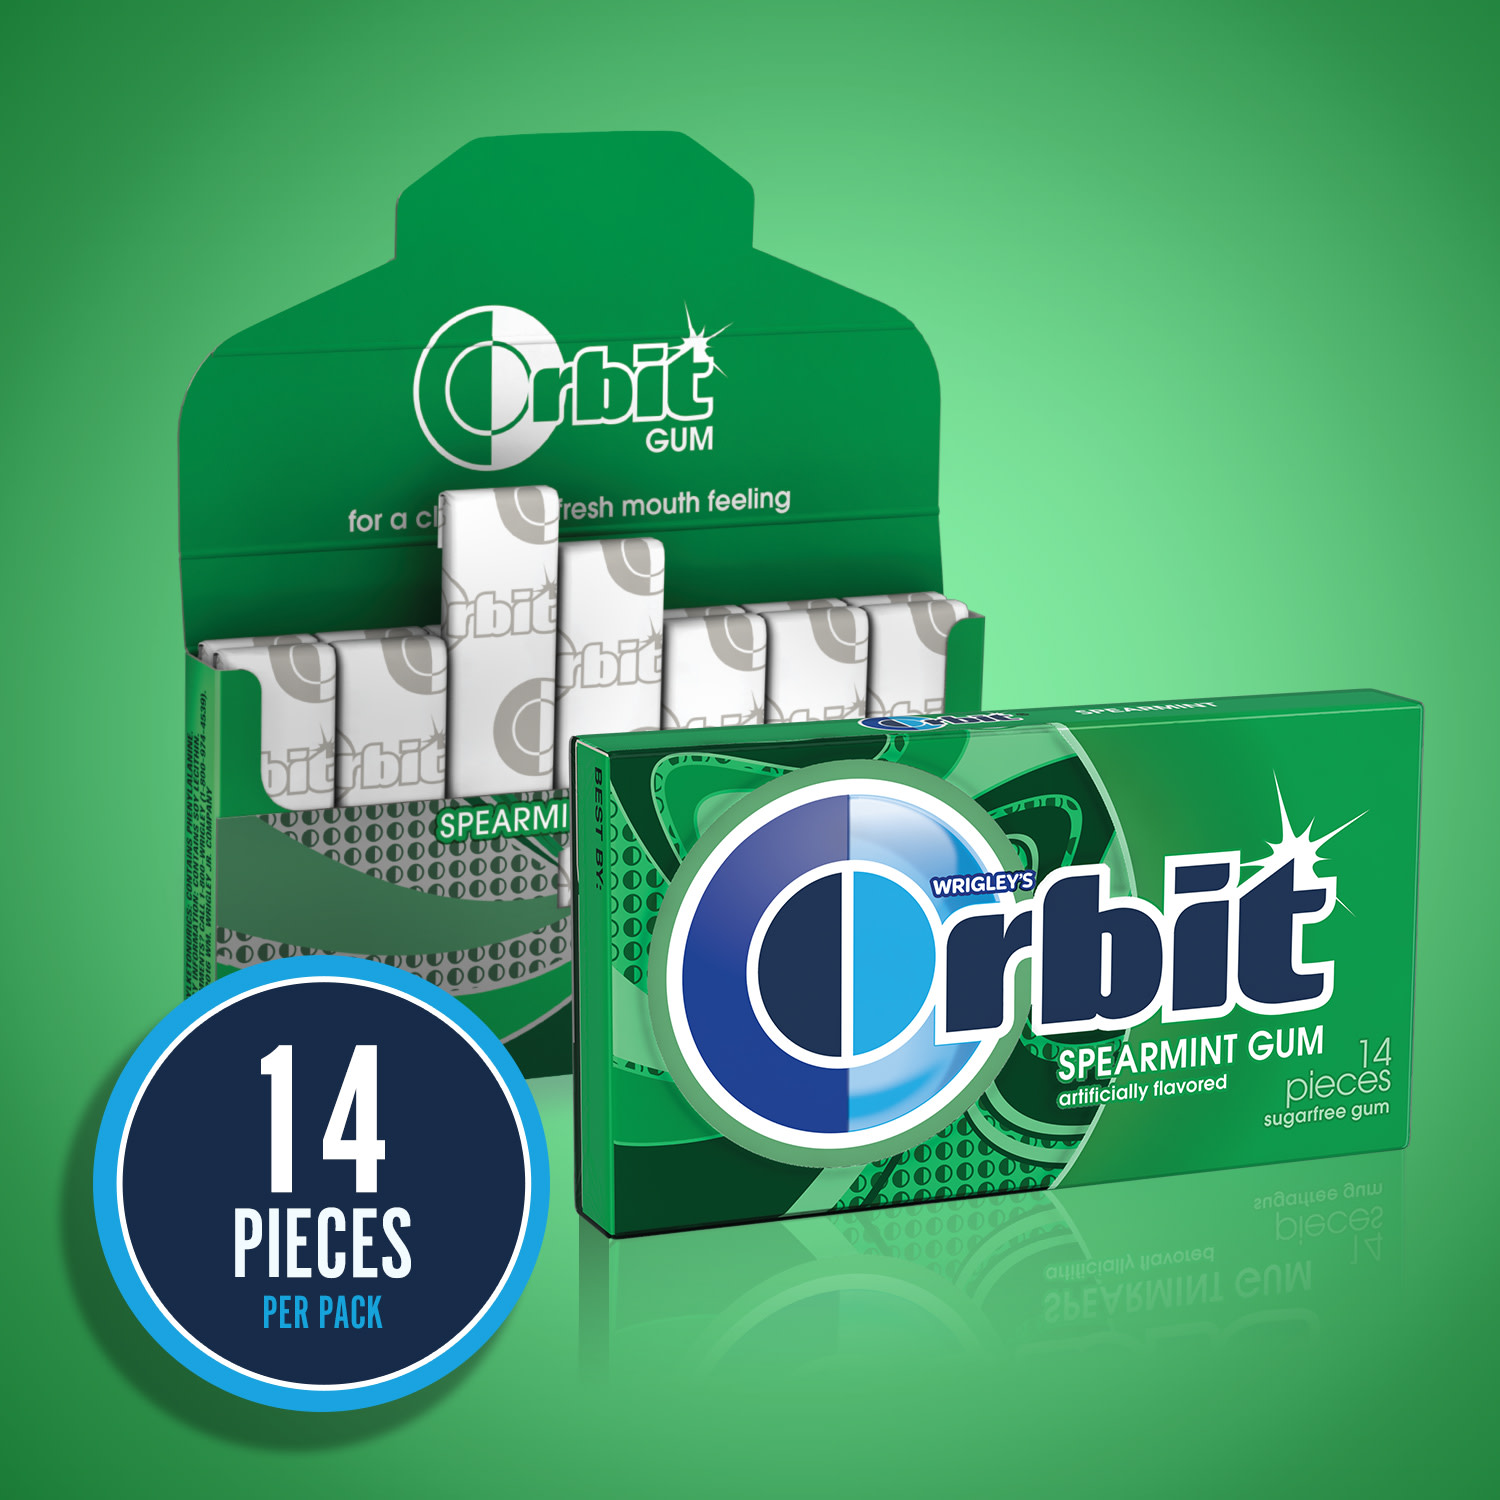 Orbit Spearmint Sugar Free Chewing Gum Travel Essentials - 3 Ct Pack - image 3 of 13